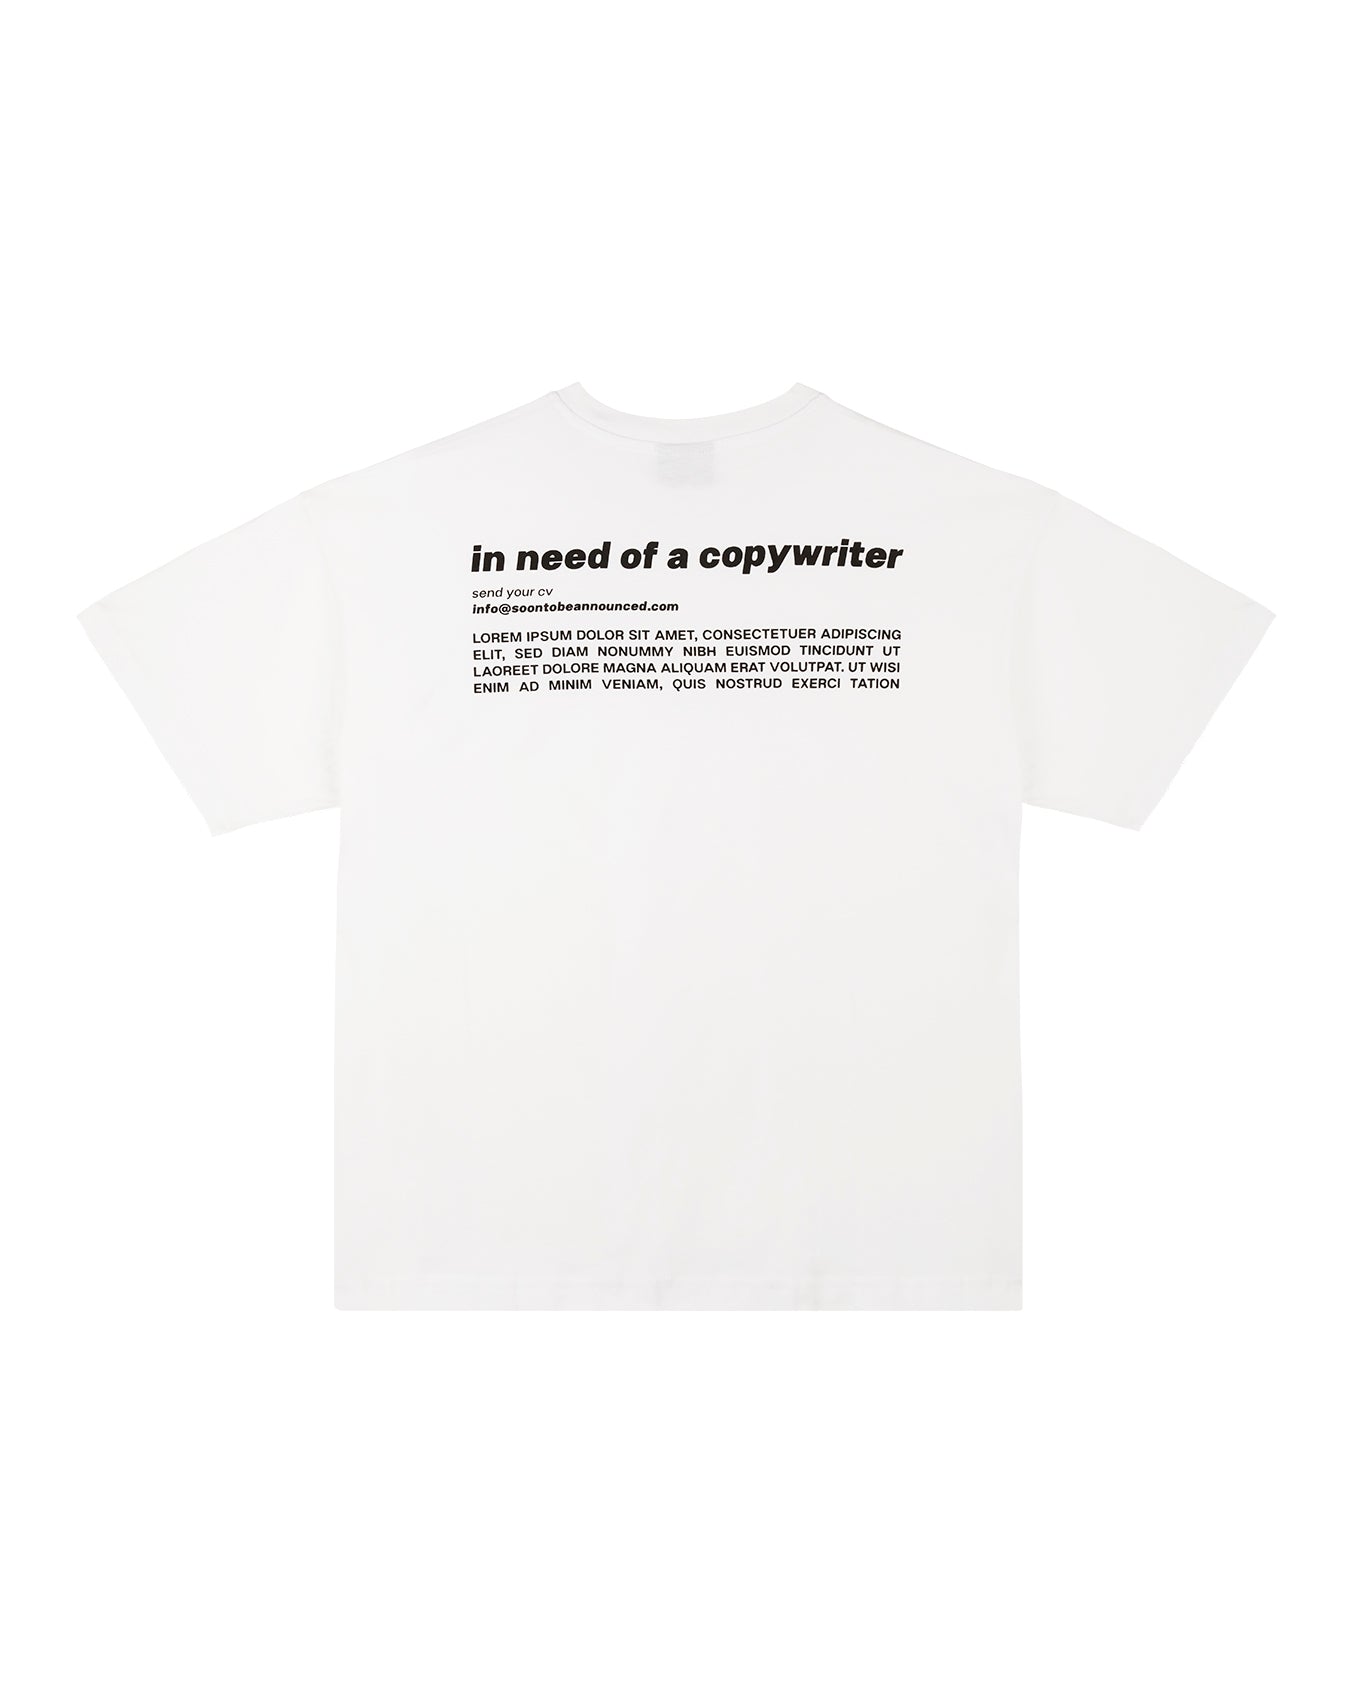 Copywriter T-Shirt